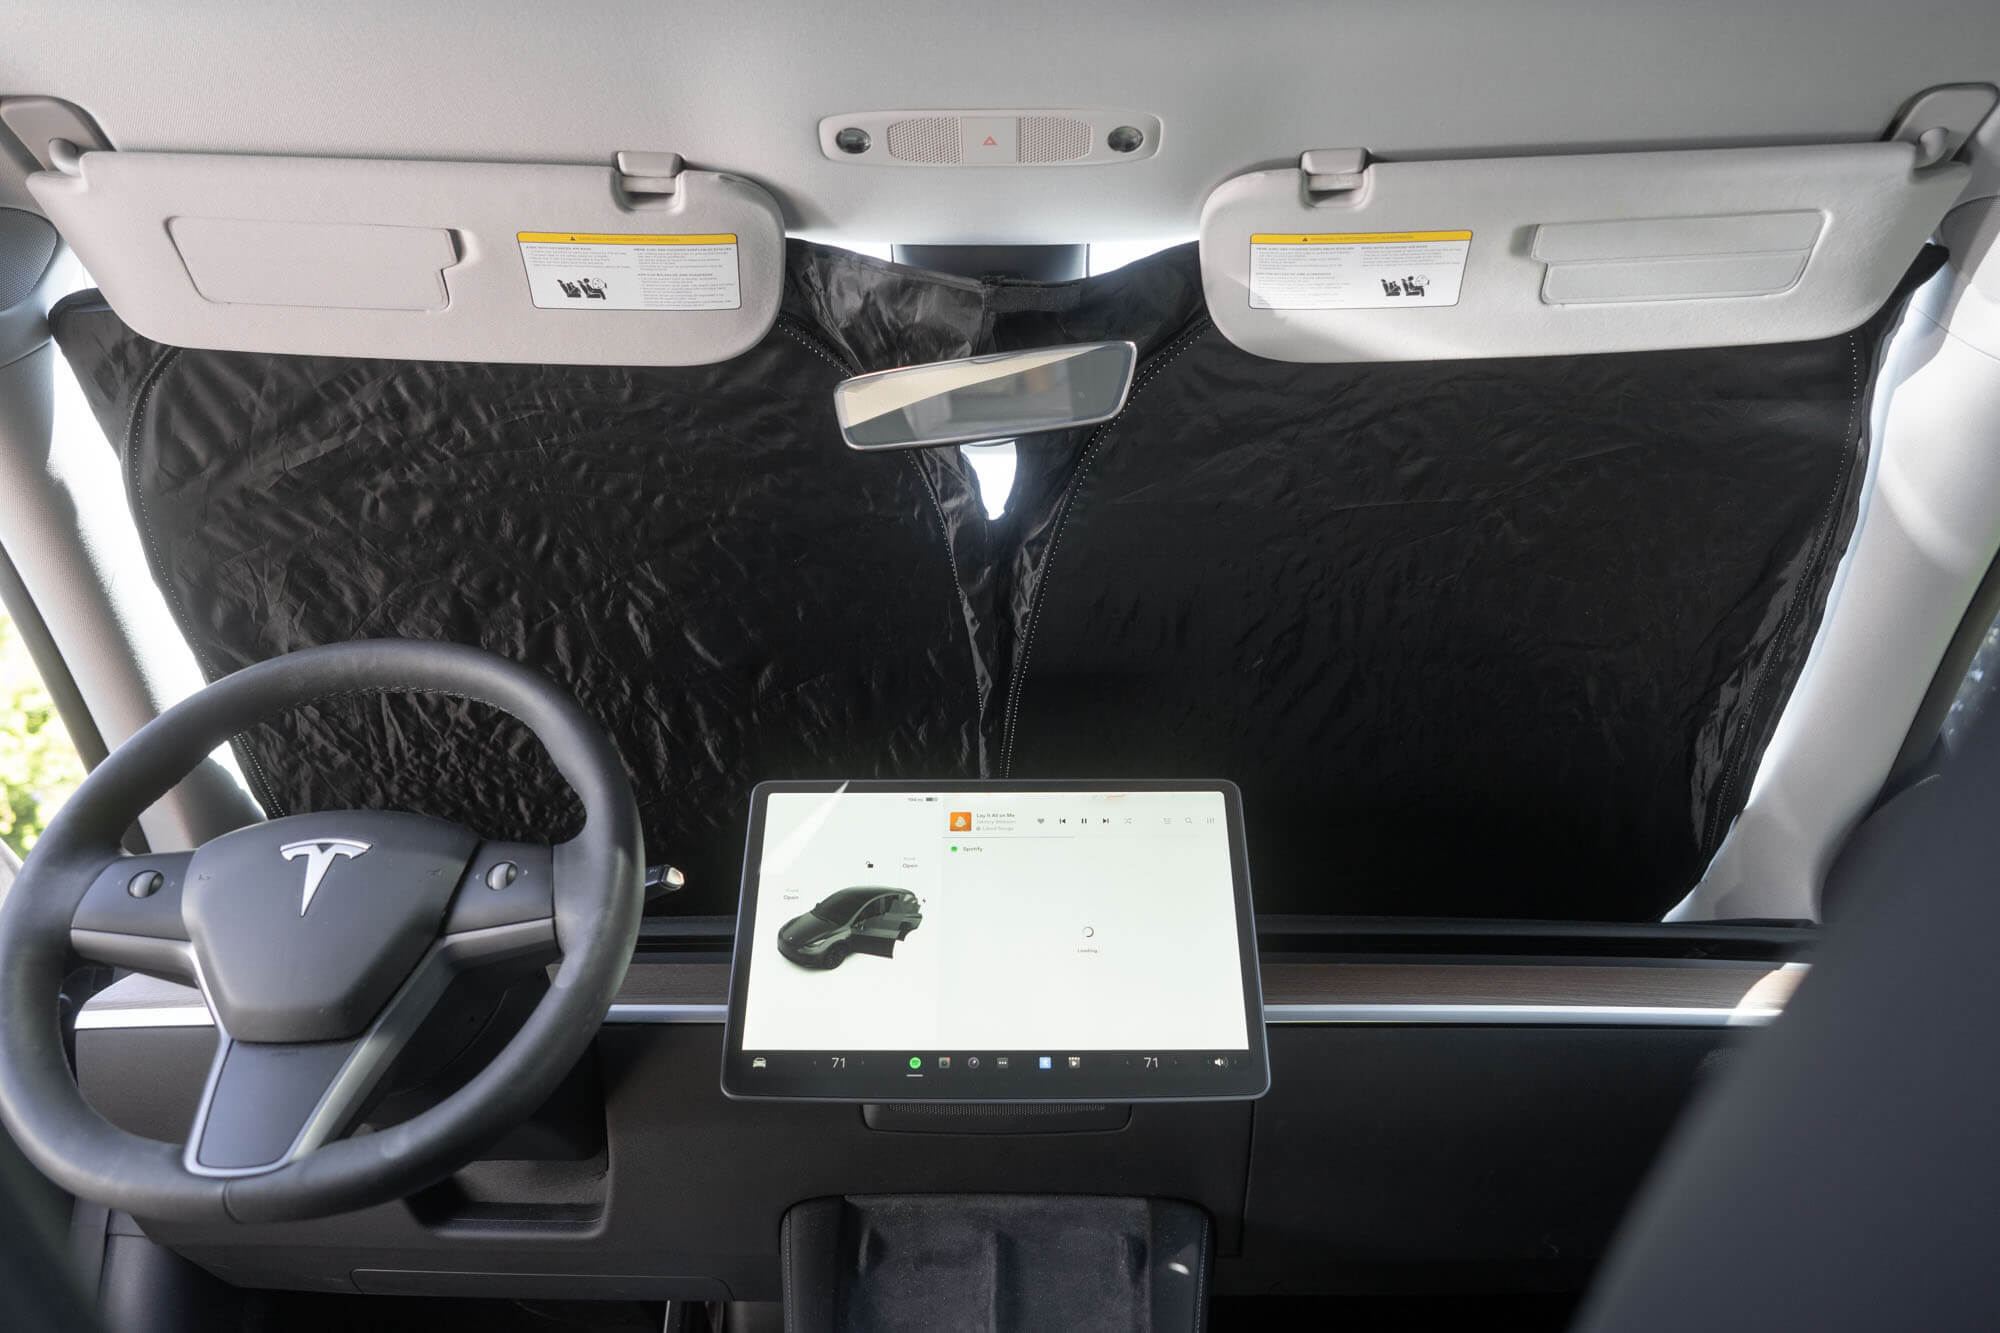 Best Tesla Model 3 Interior Accessories of 2022 from $6 - TALSEM